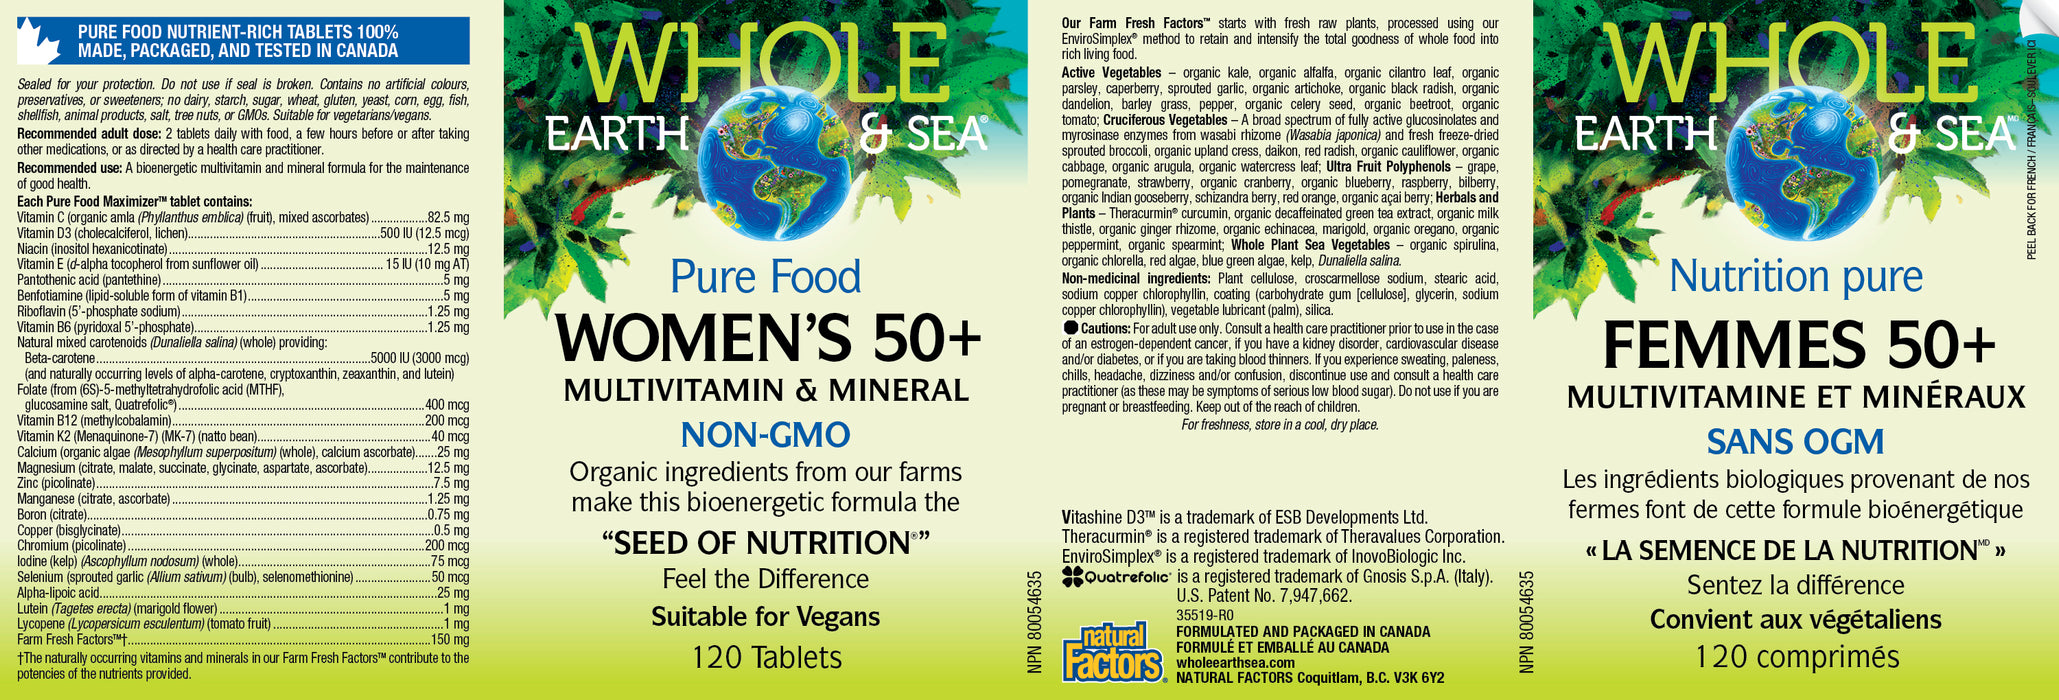 Whole Earth & Sea Women's 50+ Multivitamin & Mineral 120 Tablets